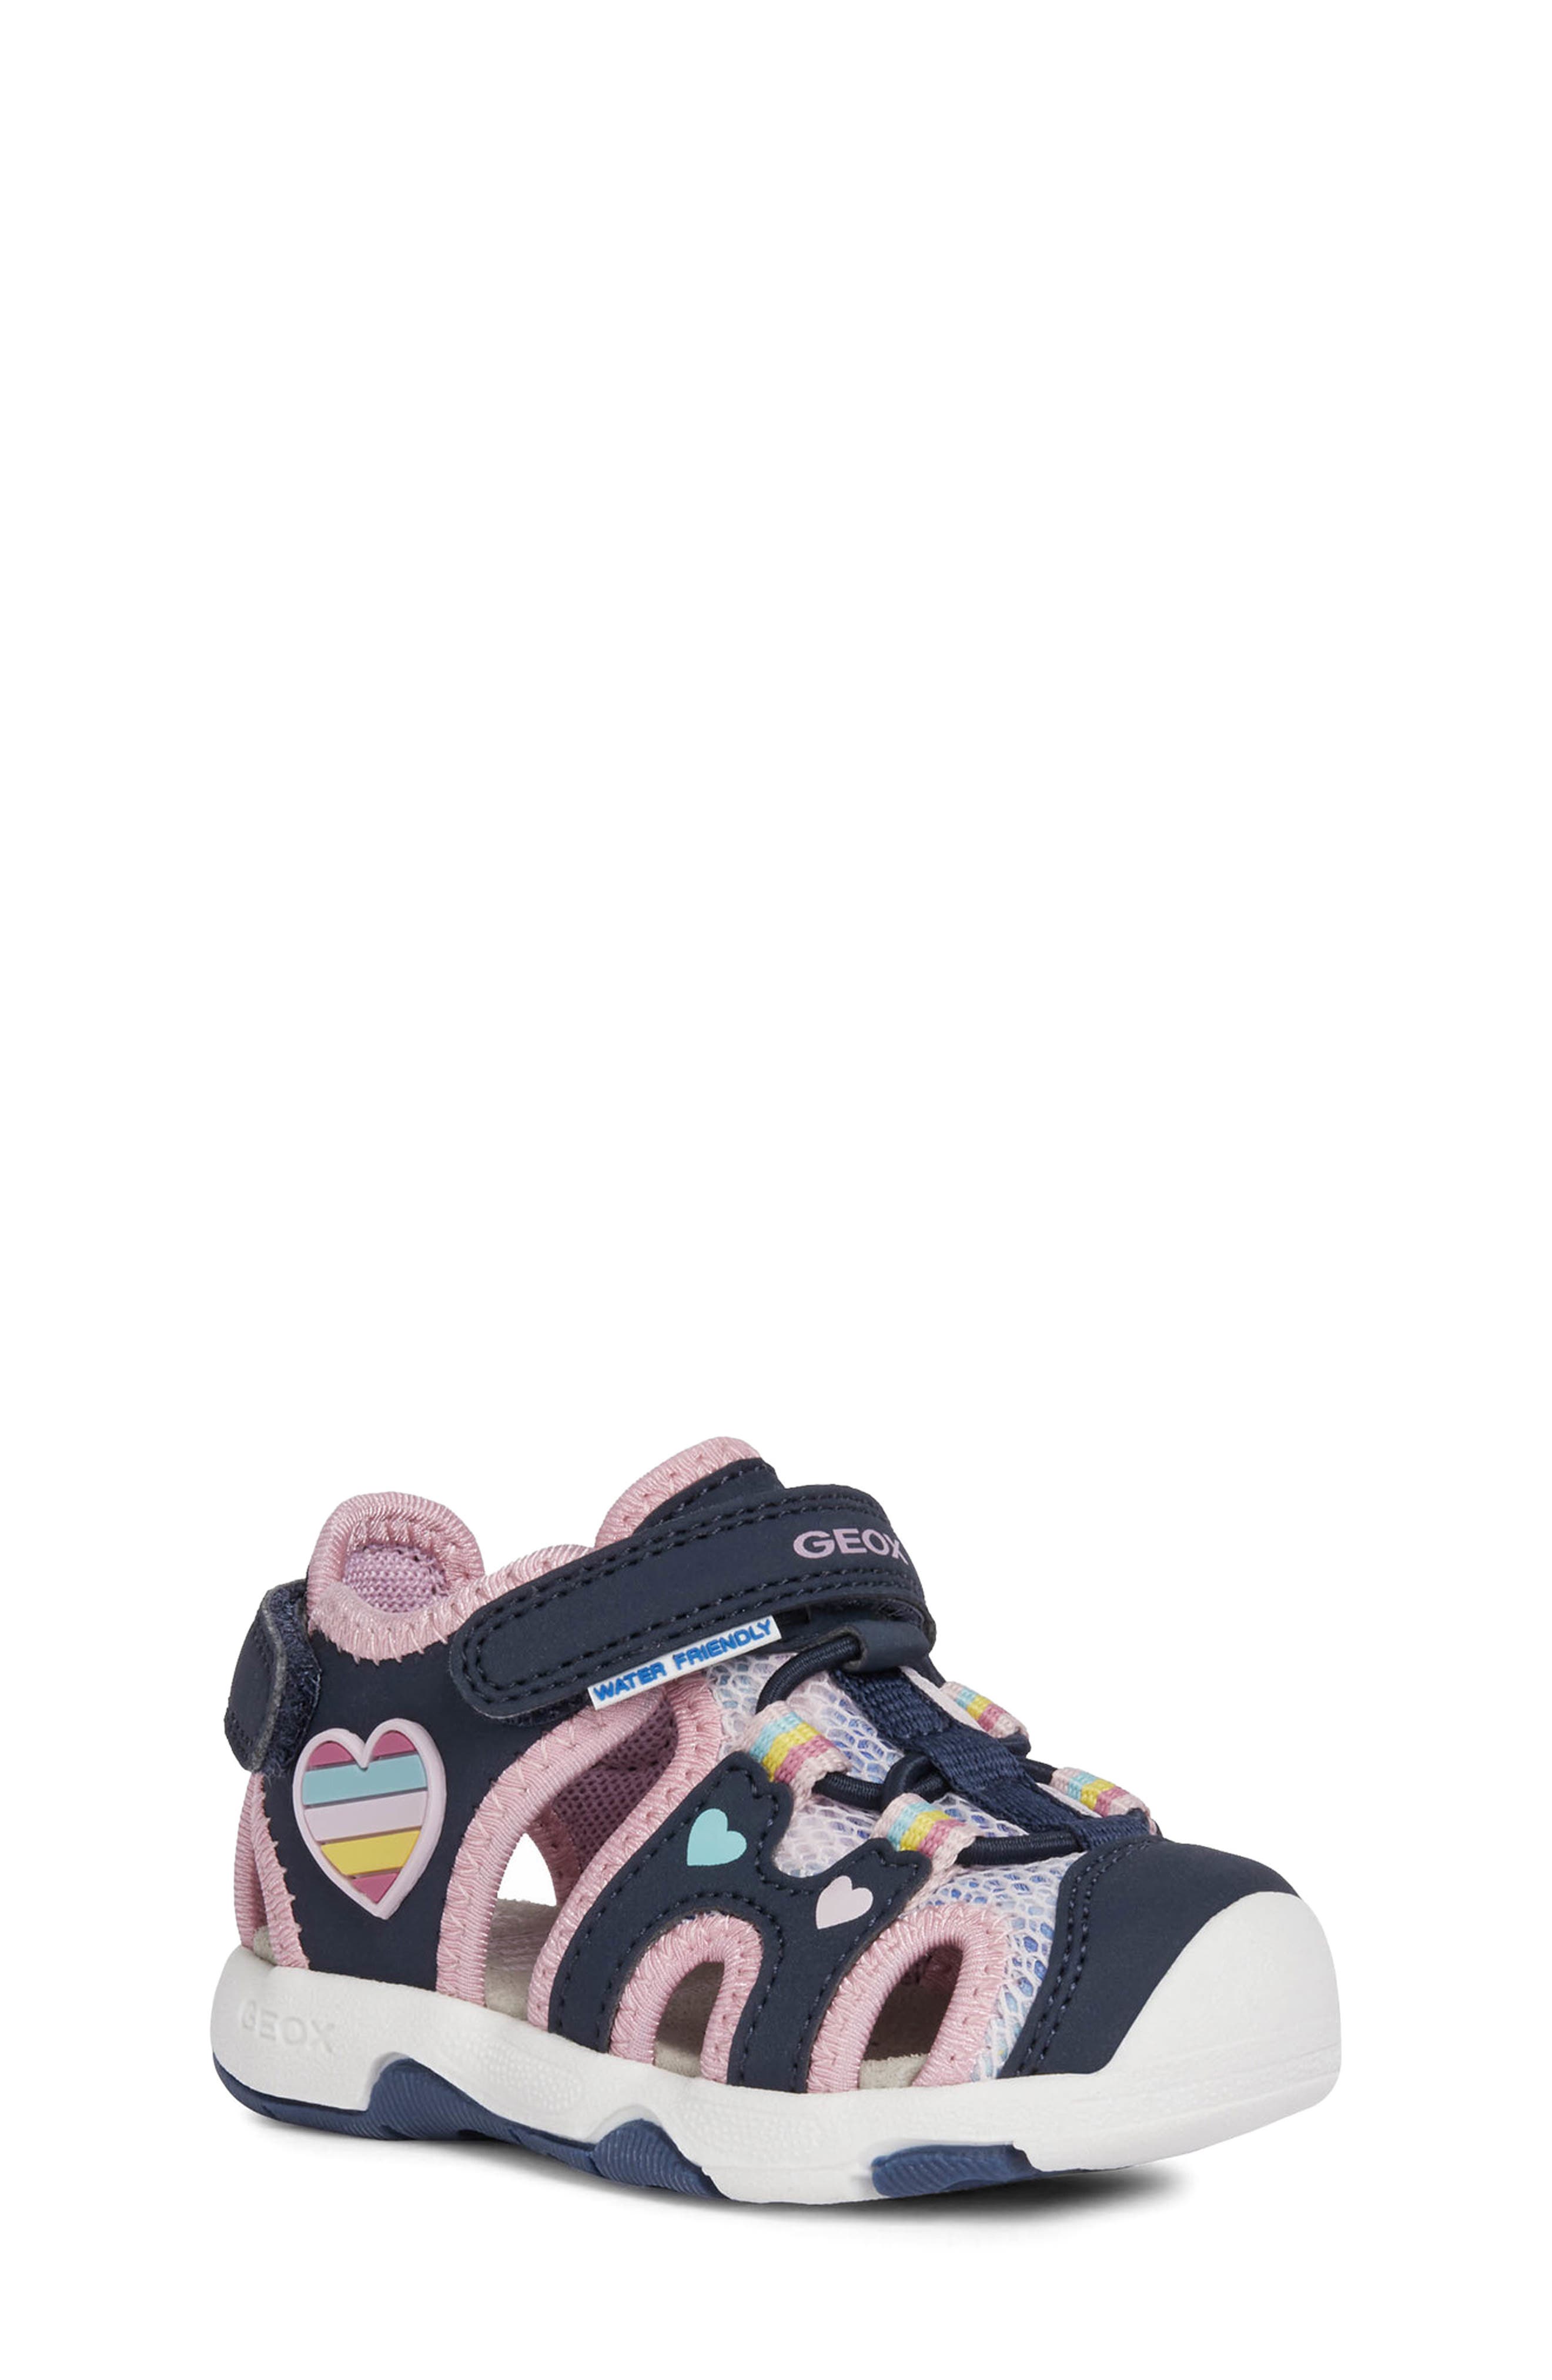 Geox Baby Girls’ B Tutim B Low-Top Sneakers